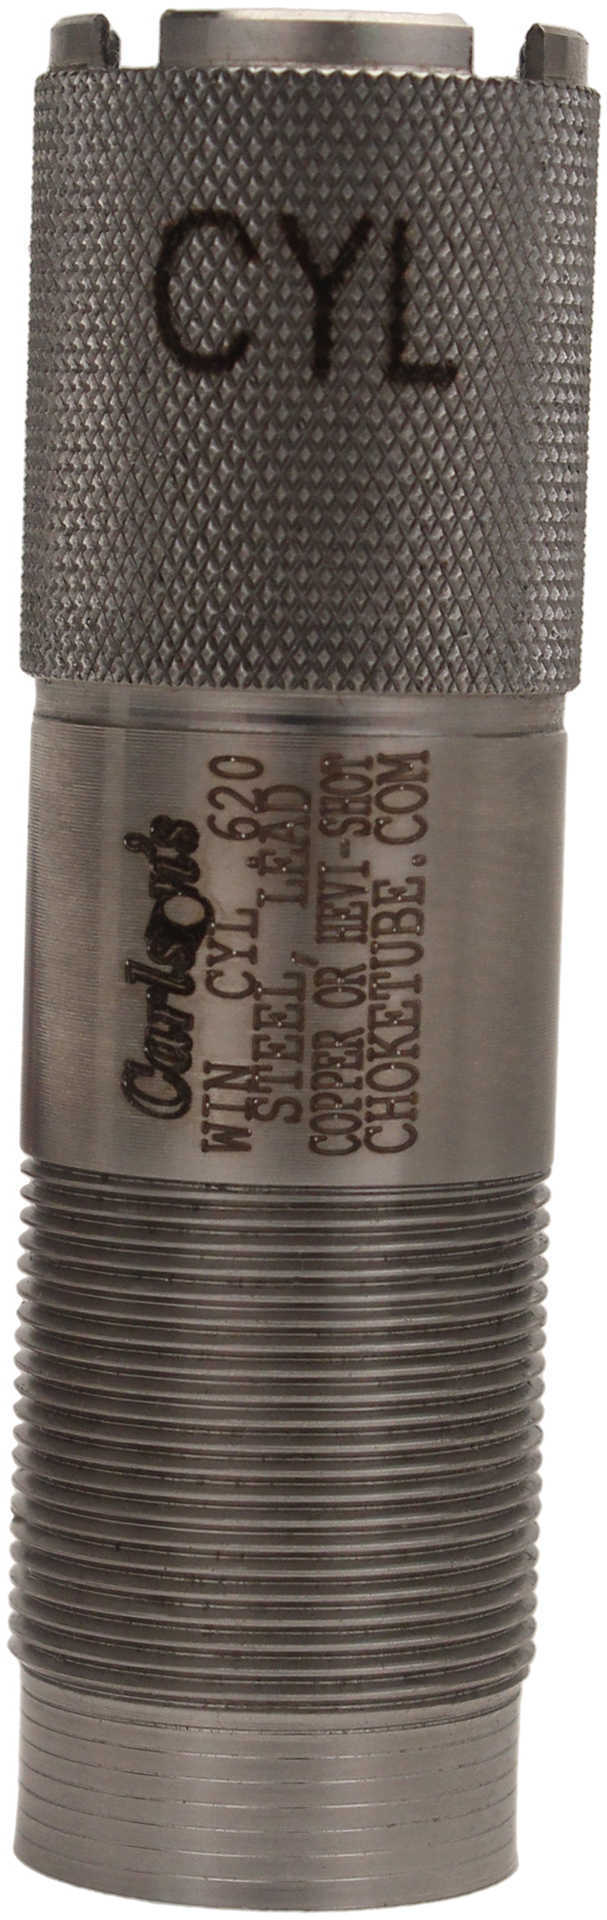 Carlsons Win/Brn/Moss Sporting Clay Choke Tubes 20 Gauge Cylinder .620 17770